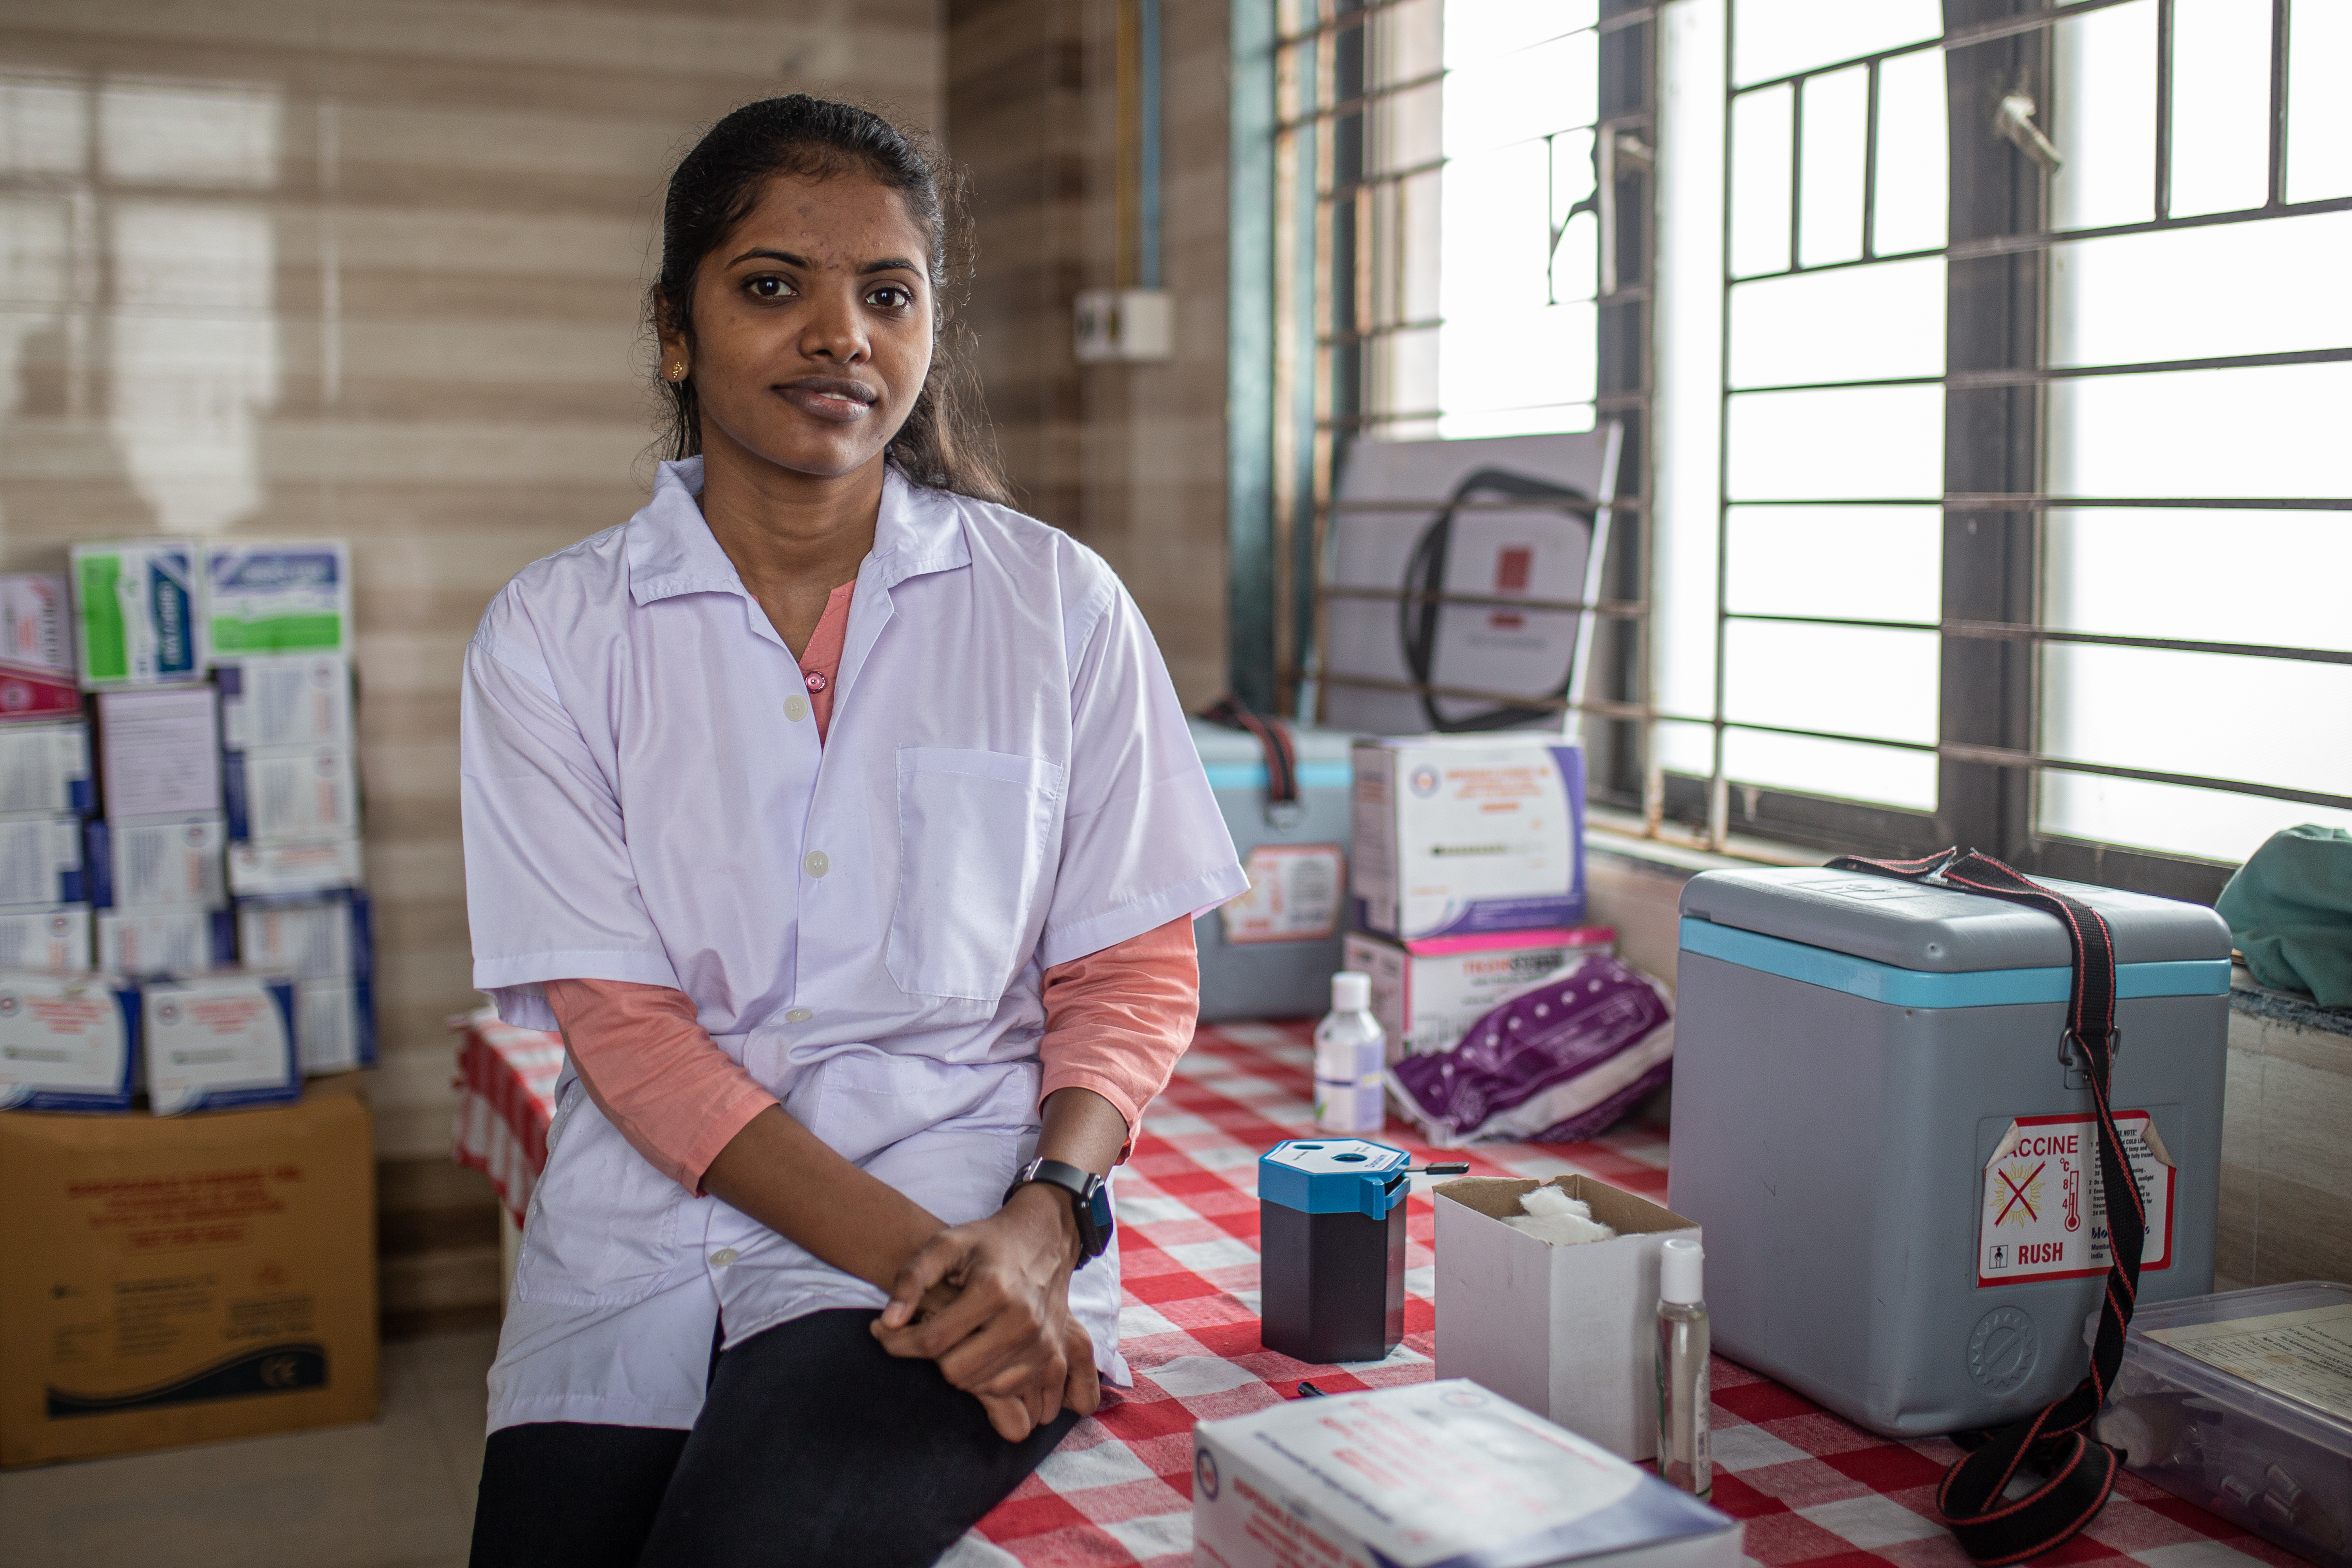 Ankita an Auxiliary Nurse Midwife at the Primary Healthcare Centre in Maharashtra Nagar, Mumbai